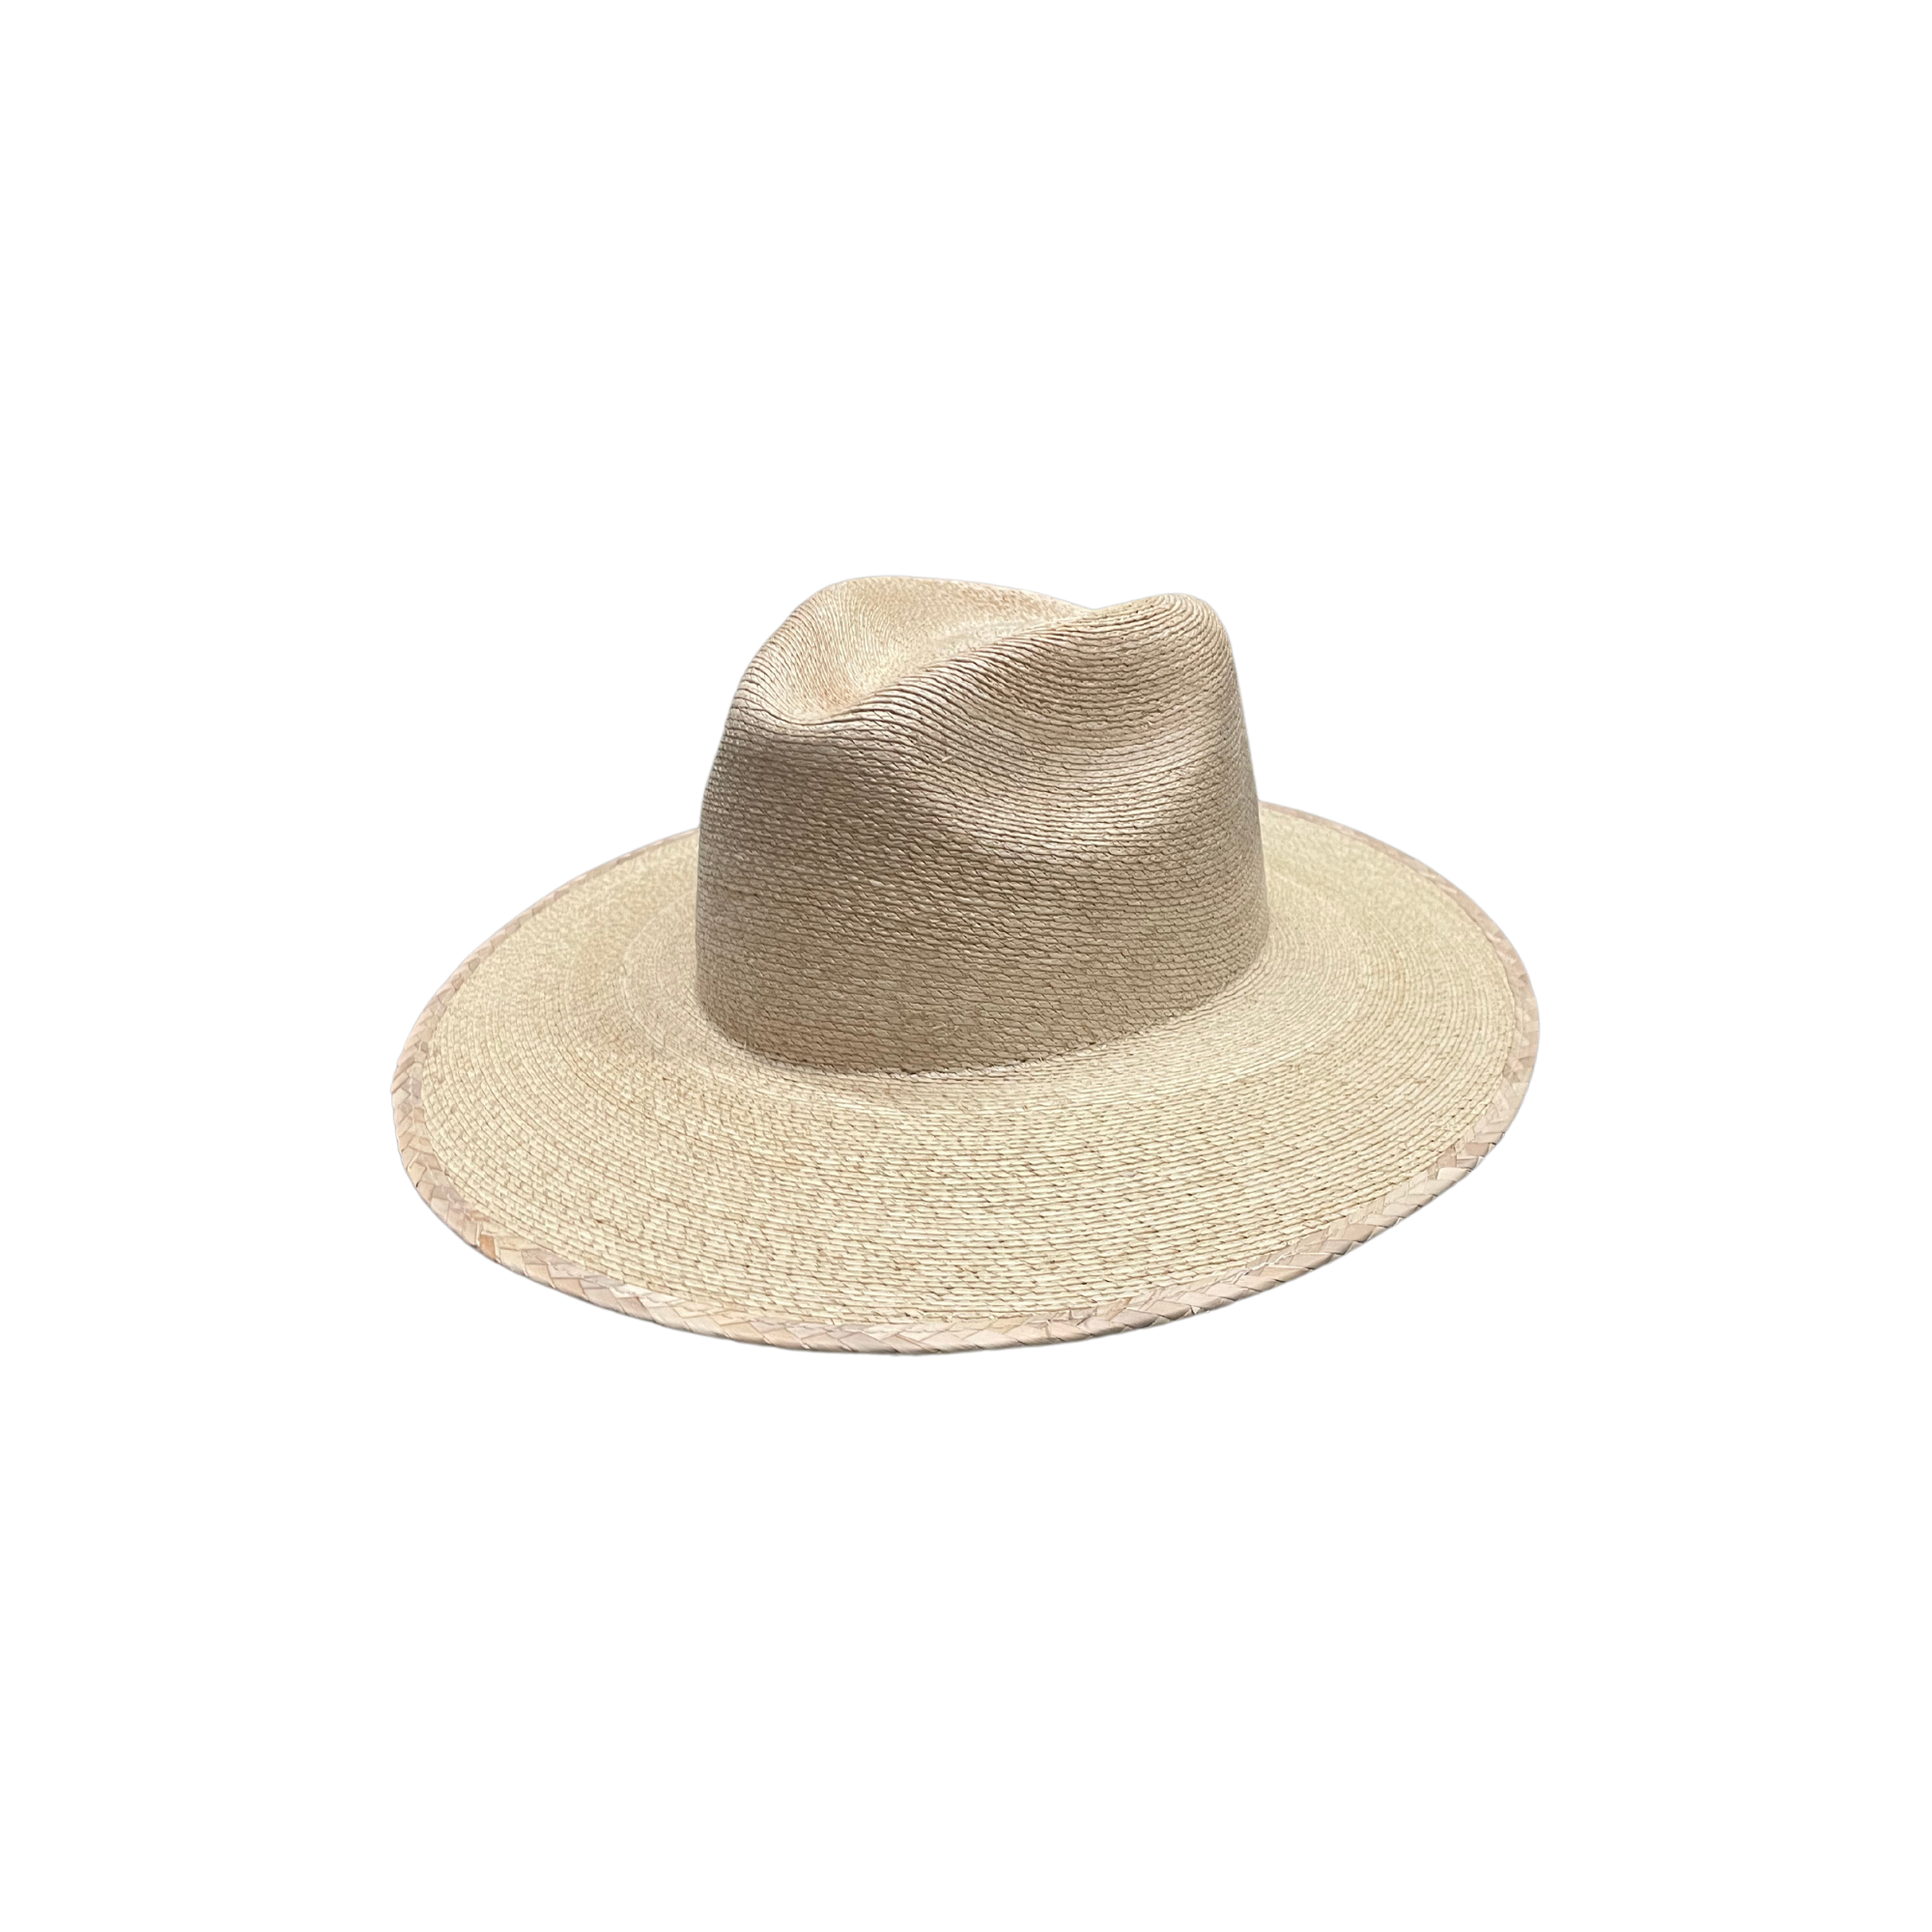 Fine Palm Leaf Rancher Brim Hats: Medium